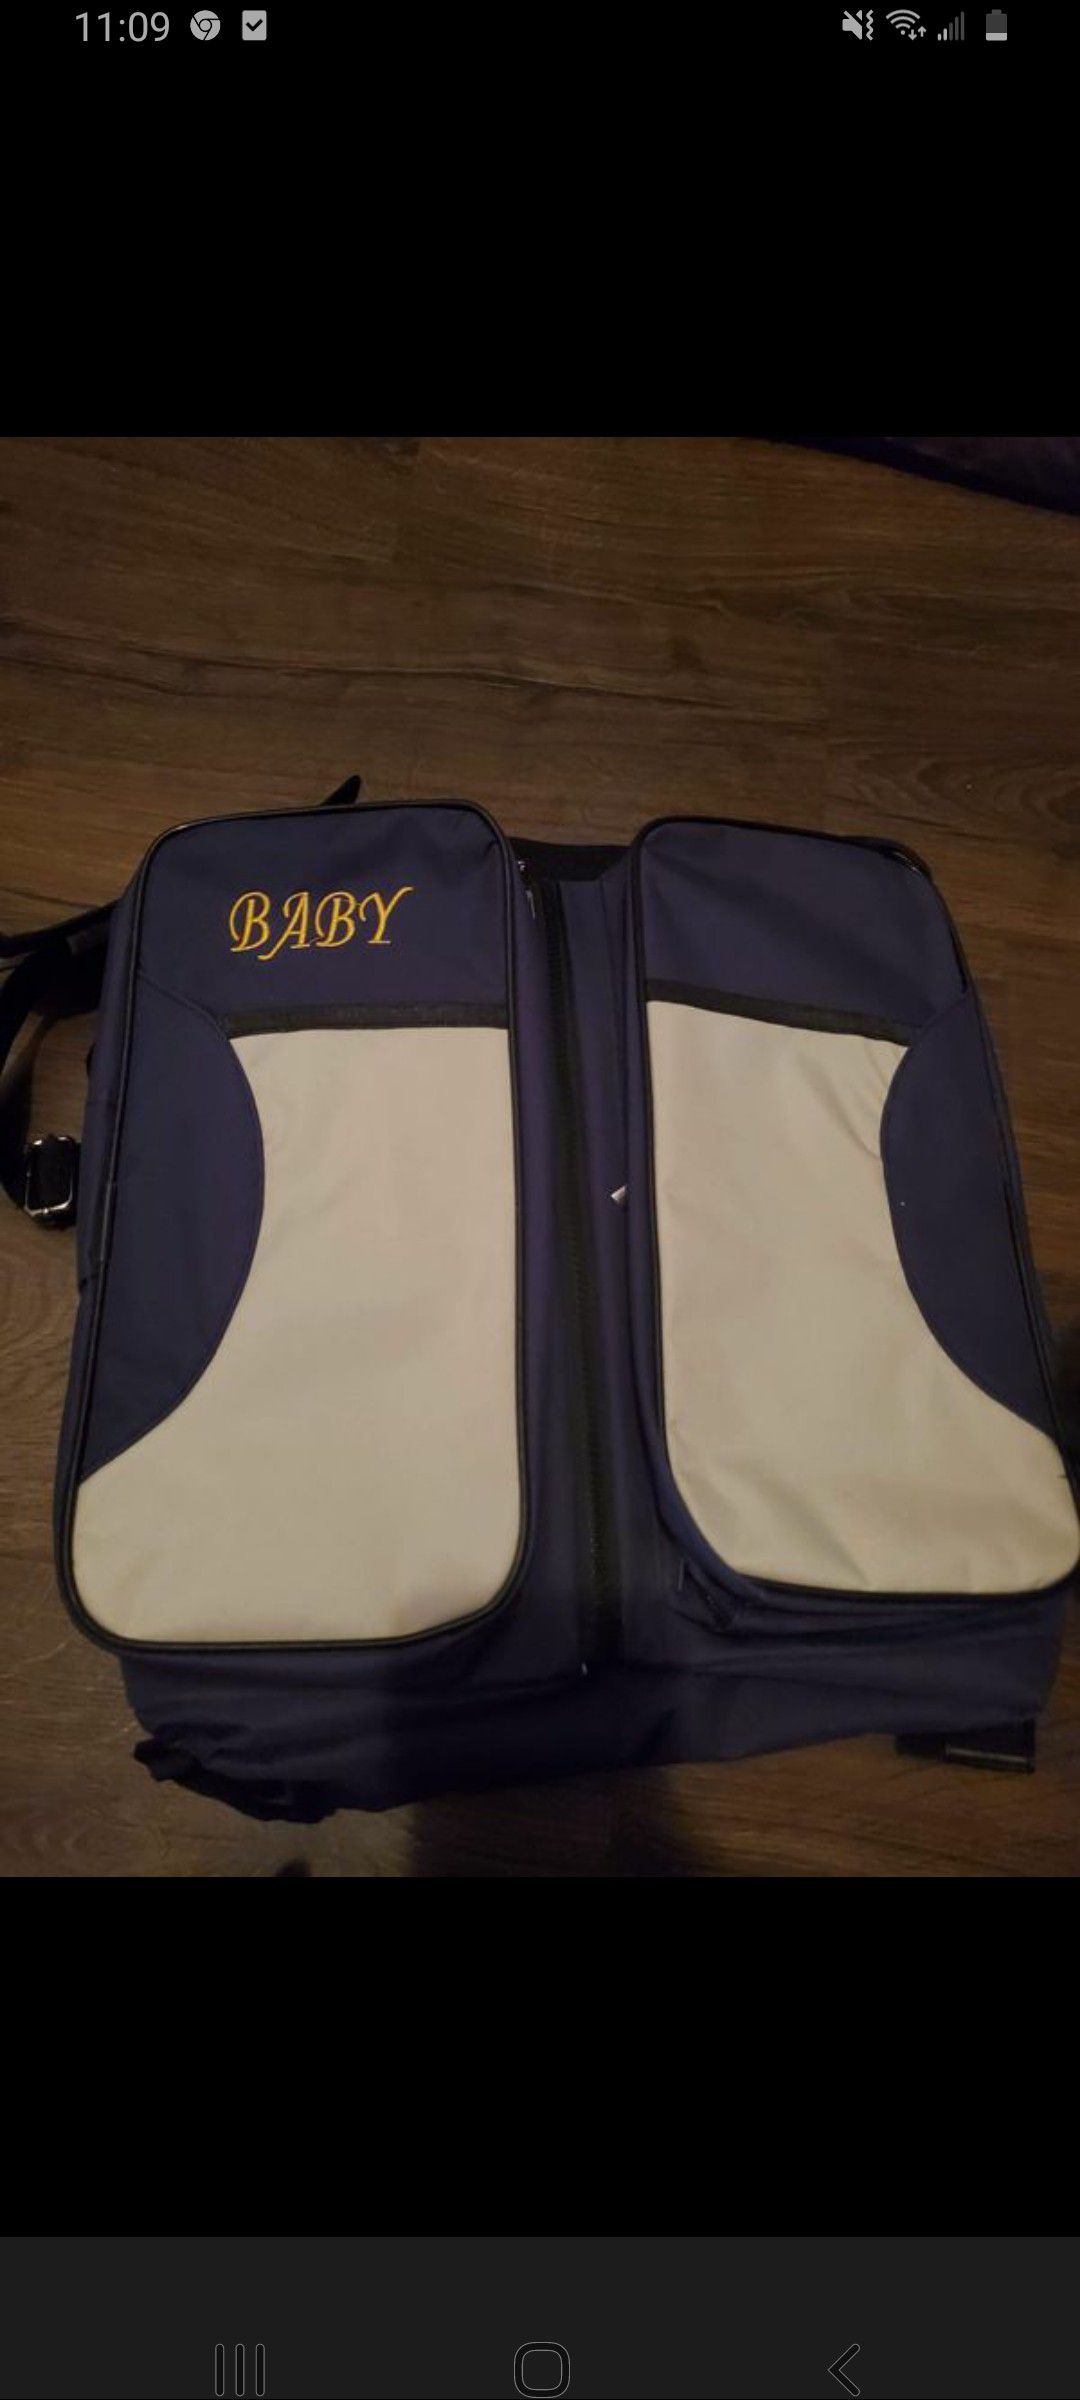 Baby portable bassinet/diaper bag